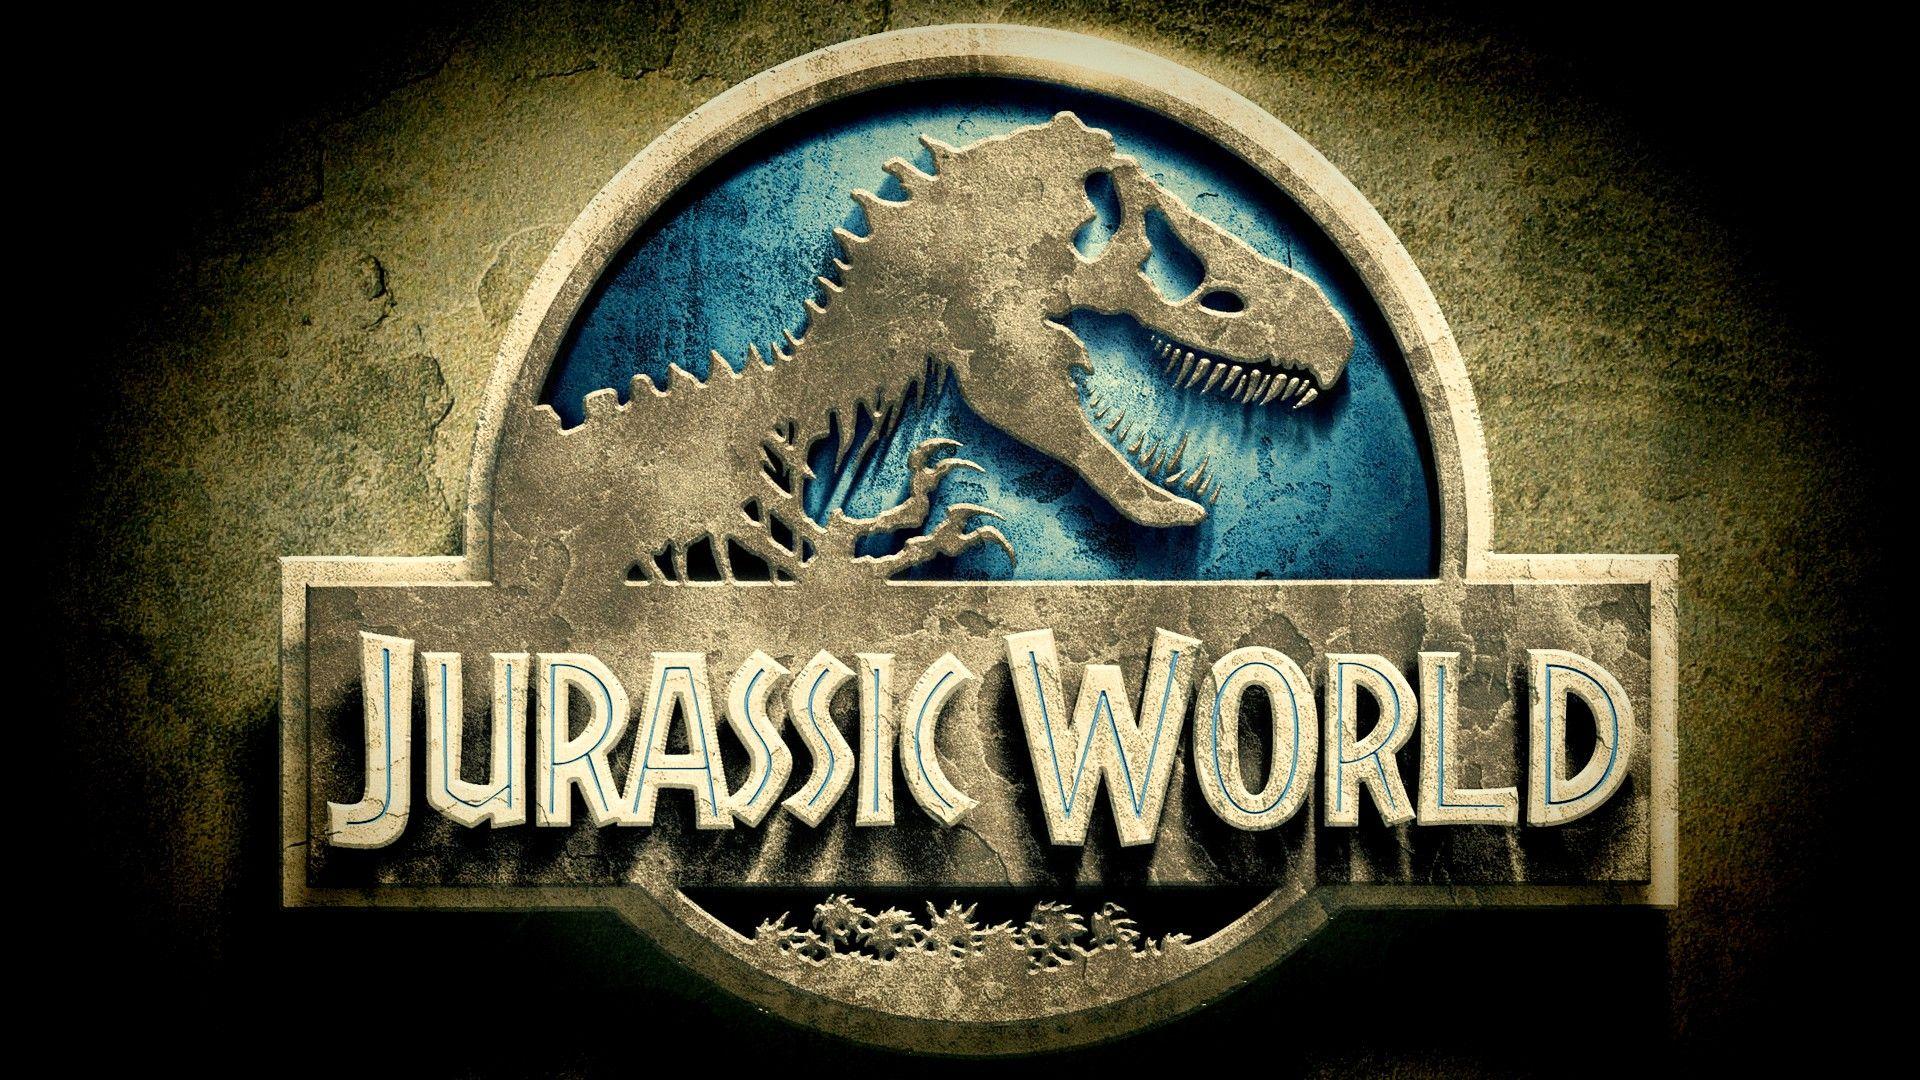 Jurassic World Movie Logo Wallpaper 49230 1920x1080px